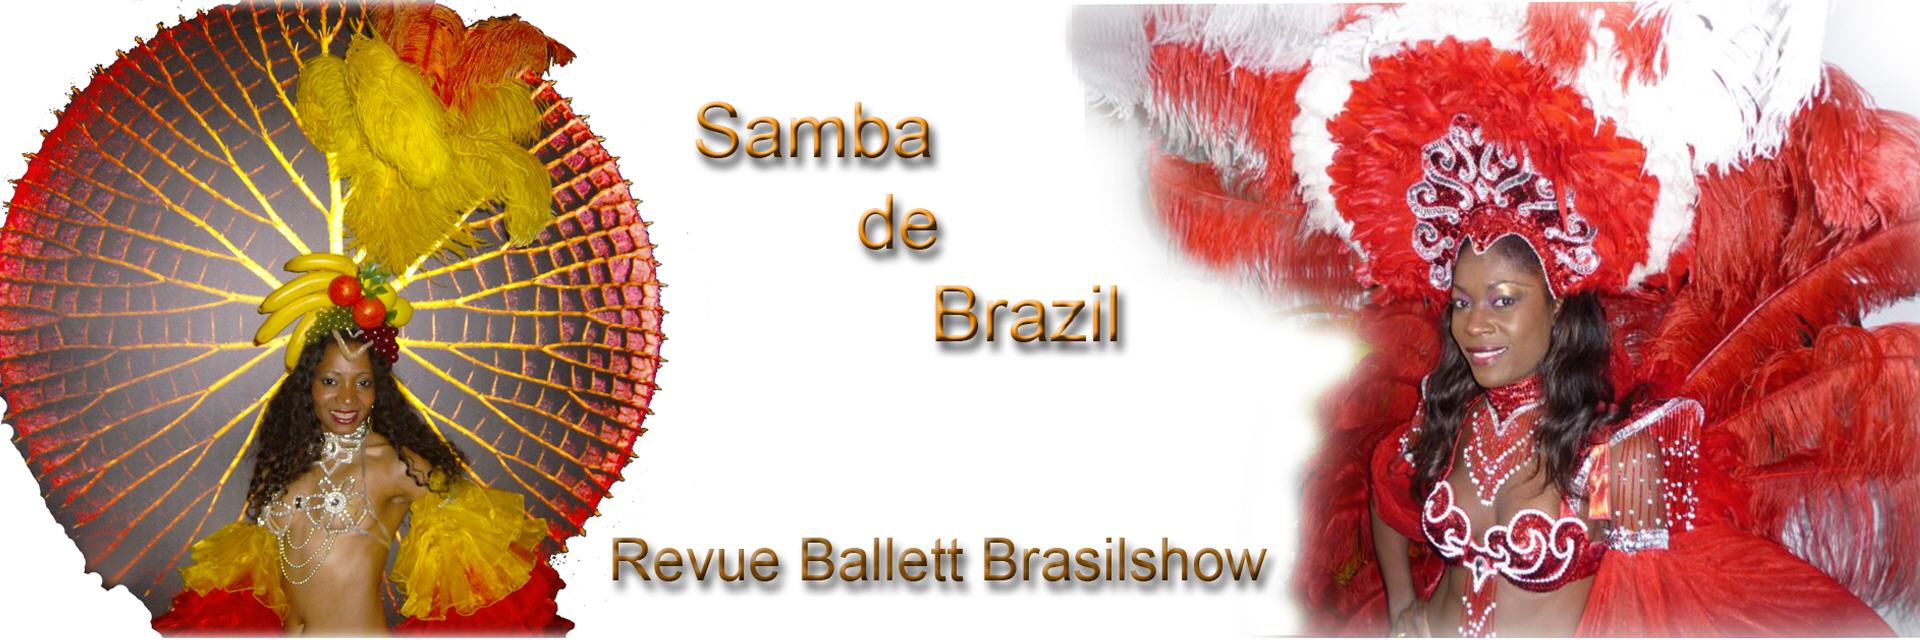 Brasilshow Sambashow